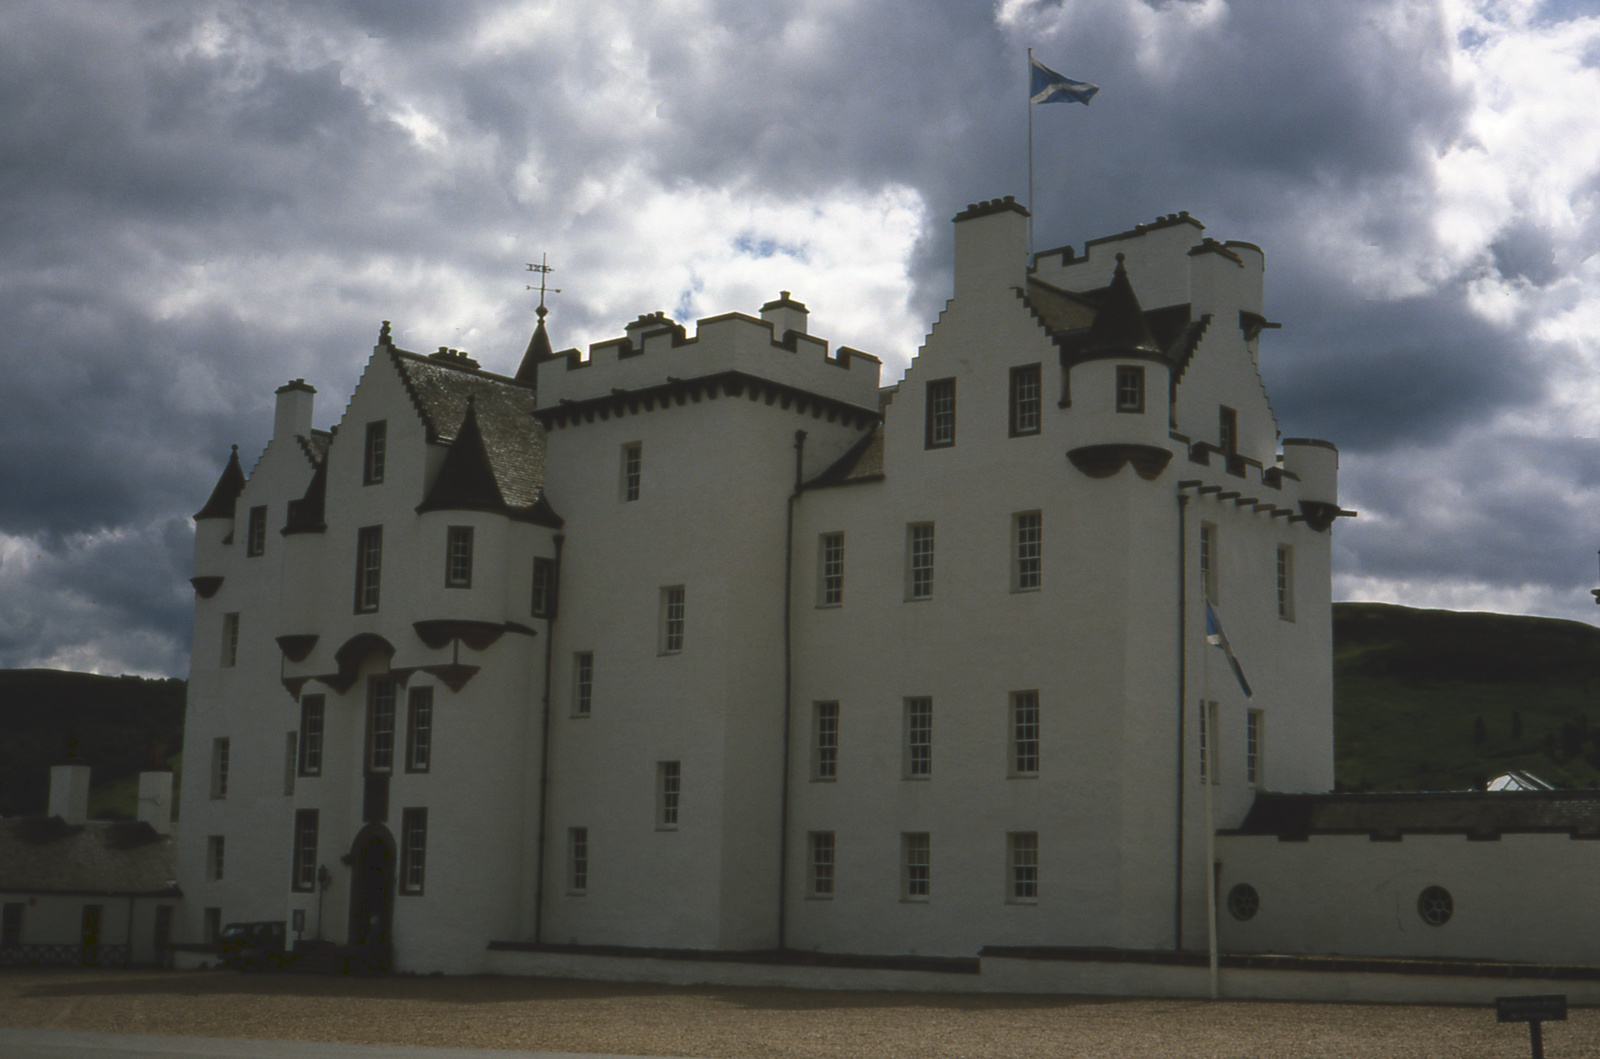 Blair kastély viharfelhőkkel